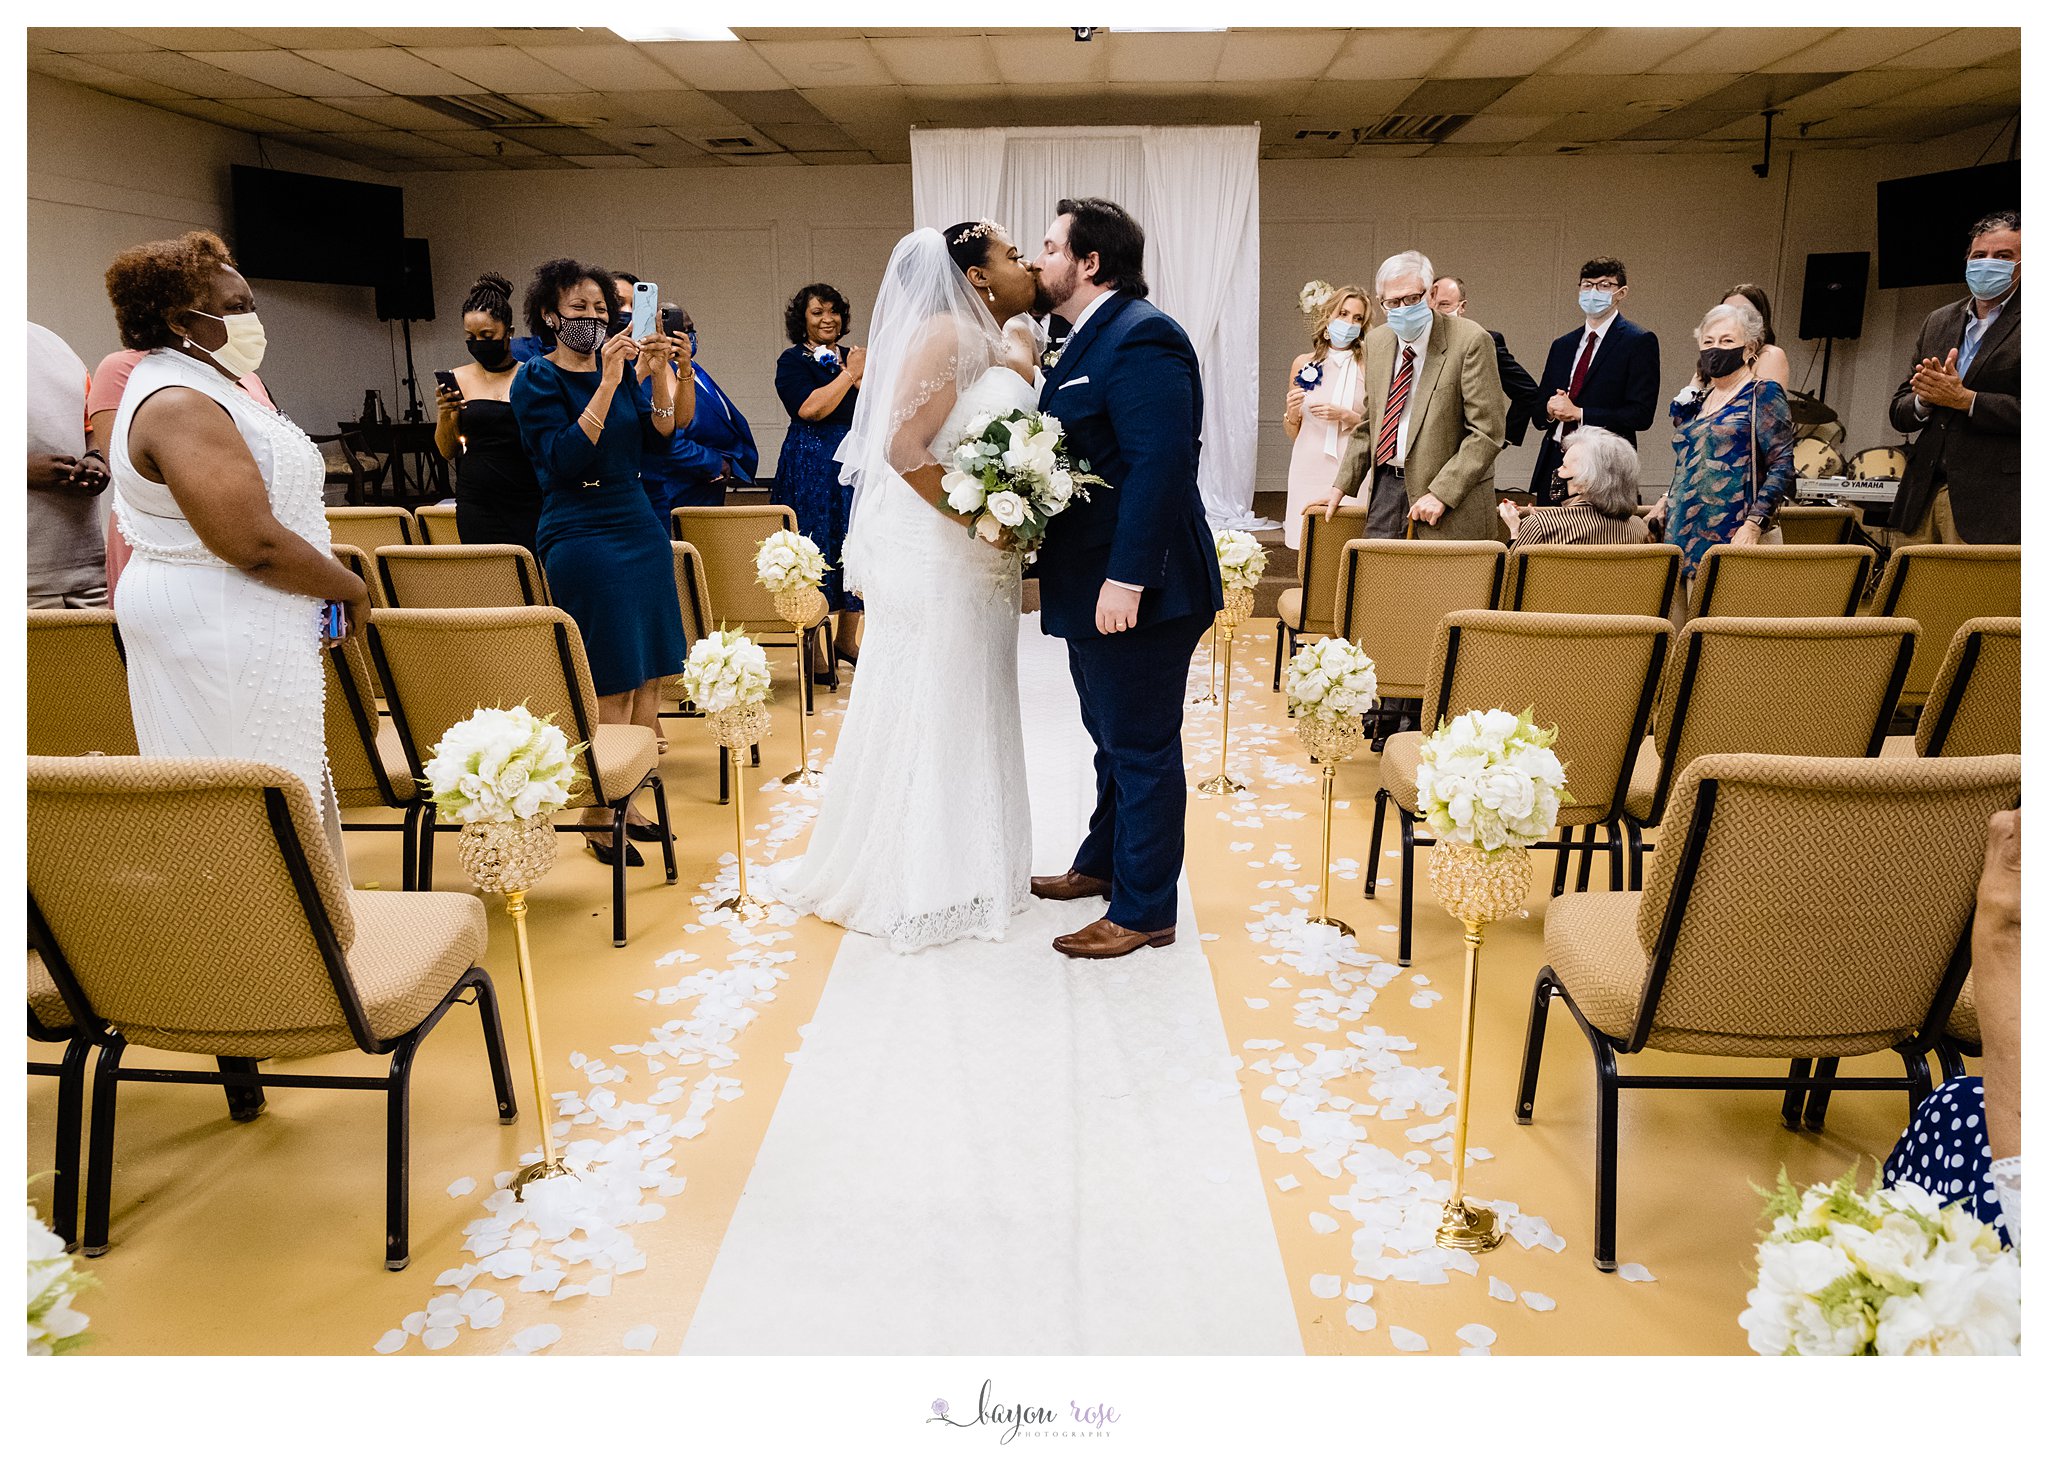 elopement wedding kiss in church aisle